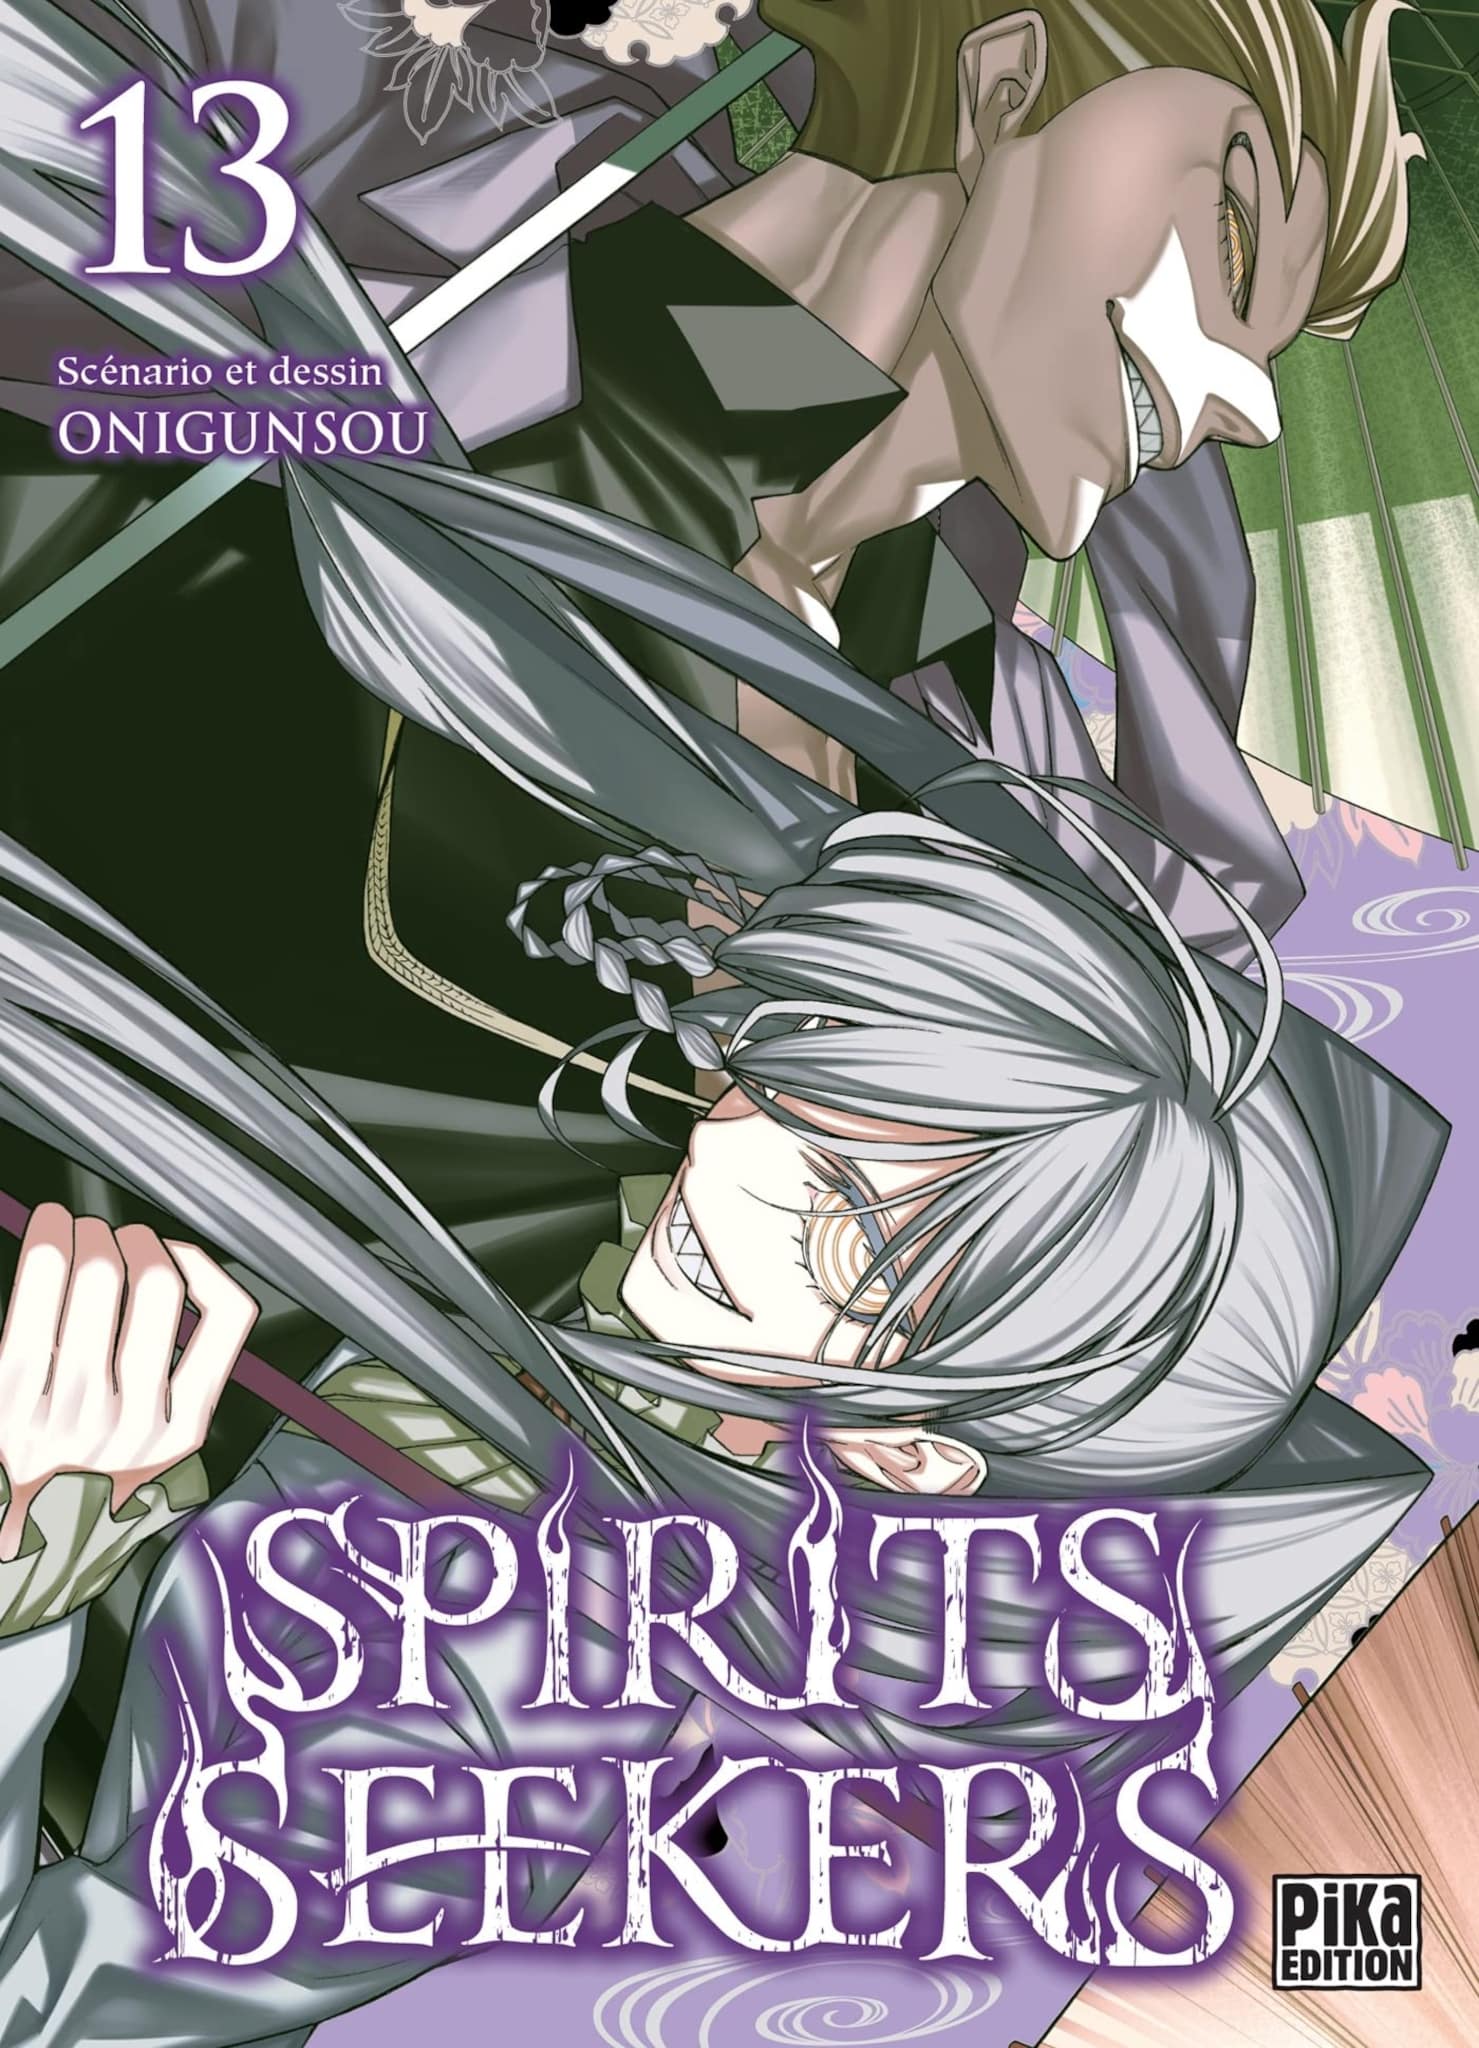 Tome 13 du manga Spirits Seekers